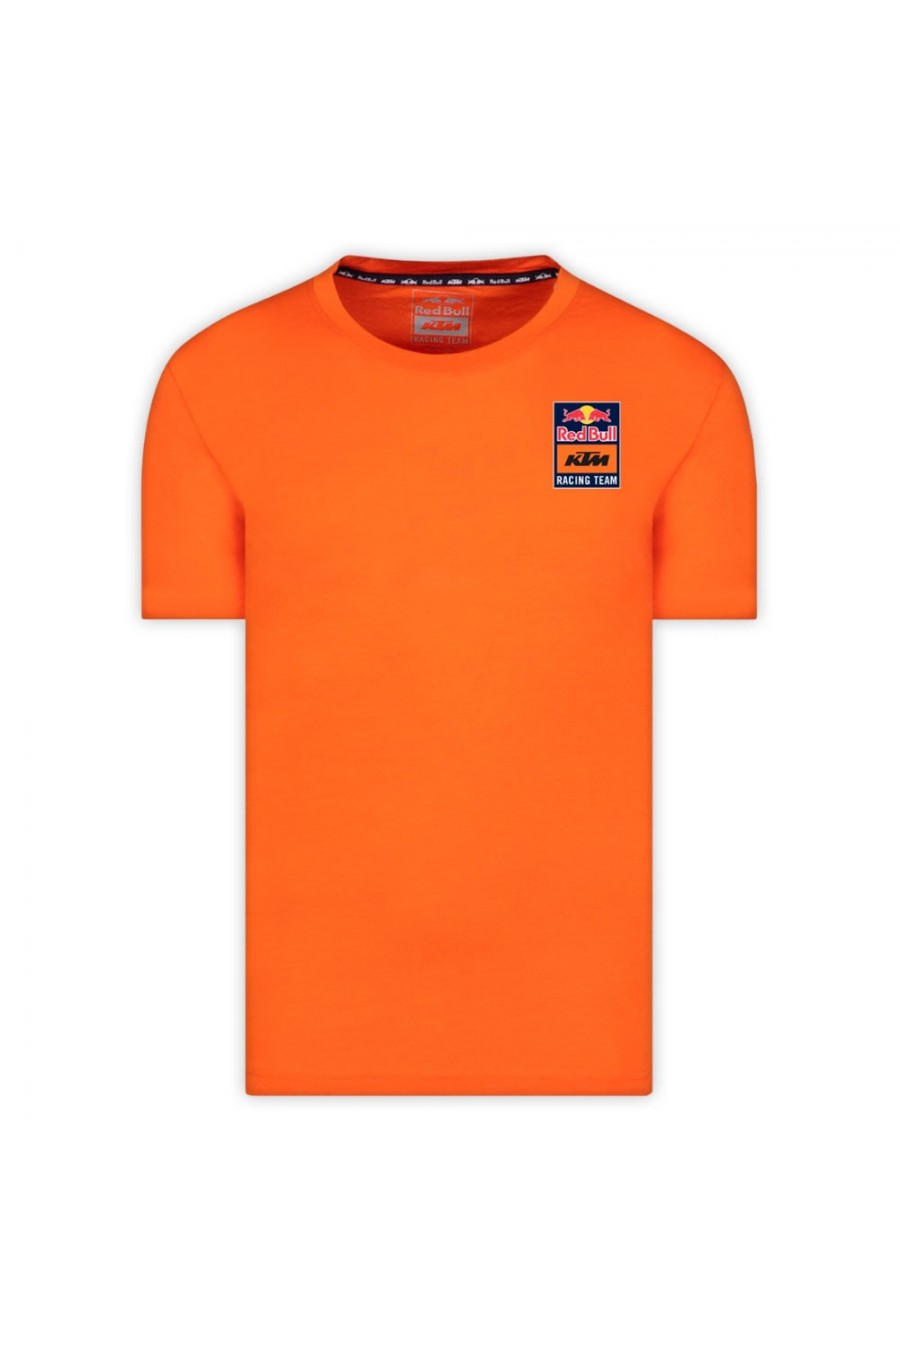 Red Bull KTM Racing Fan Orange T-Shirt